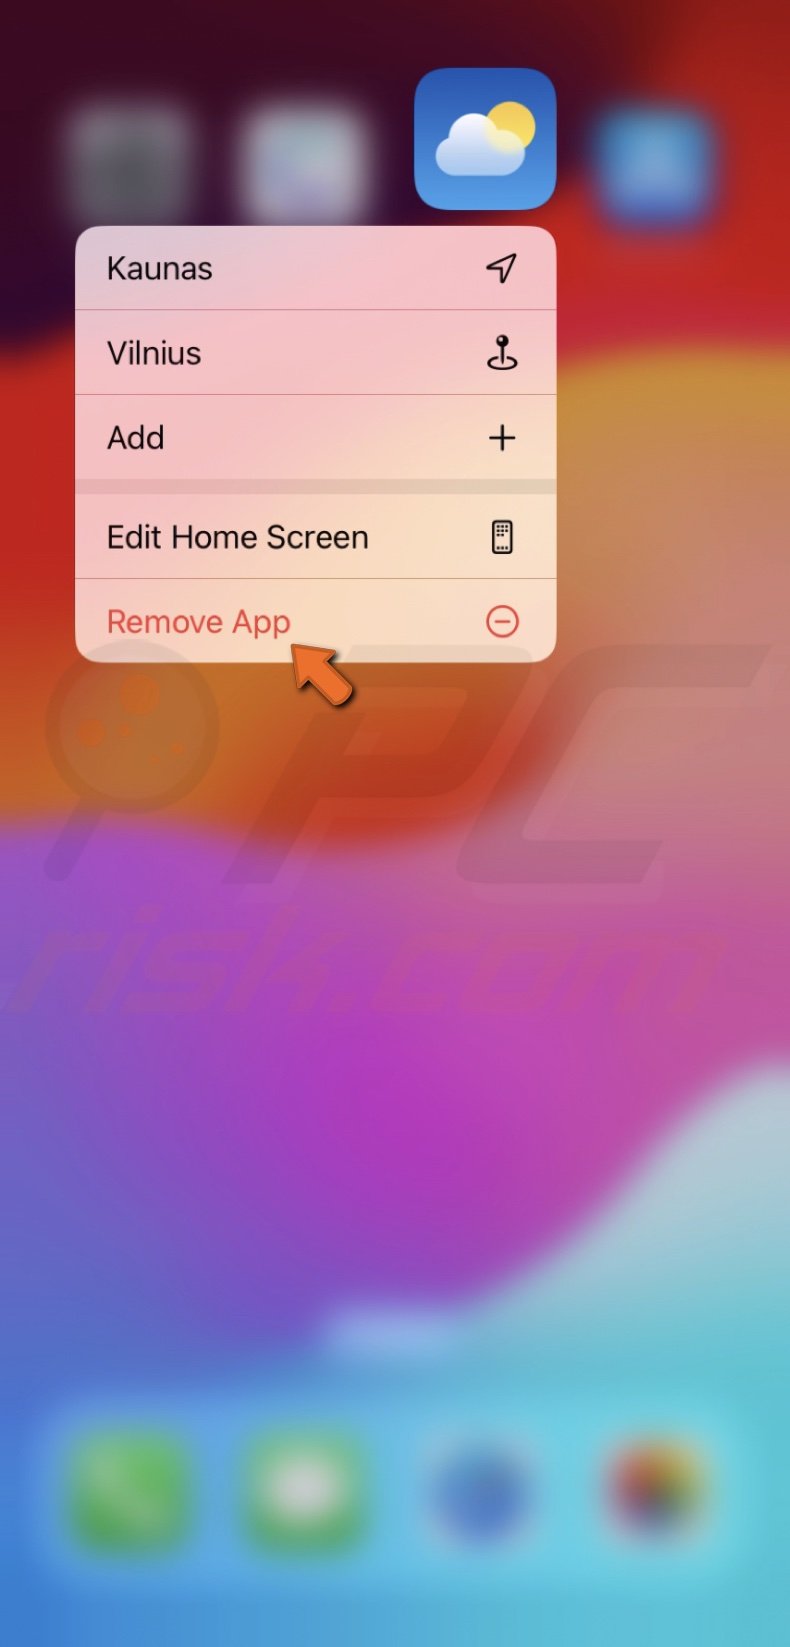 Tap Remove App